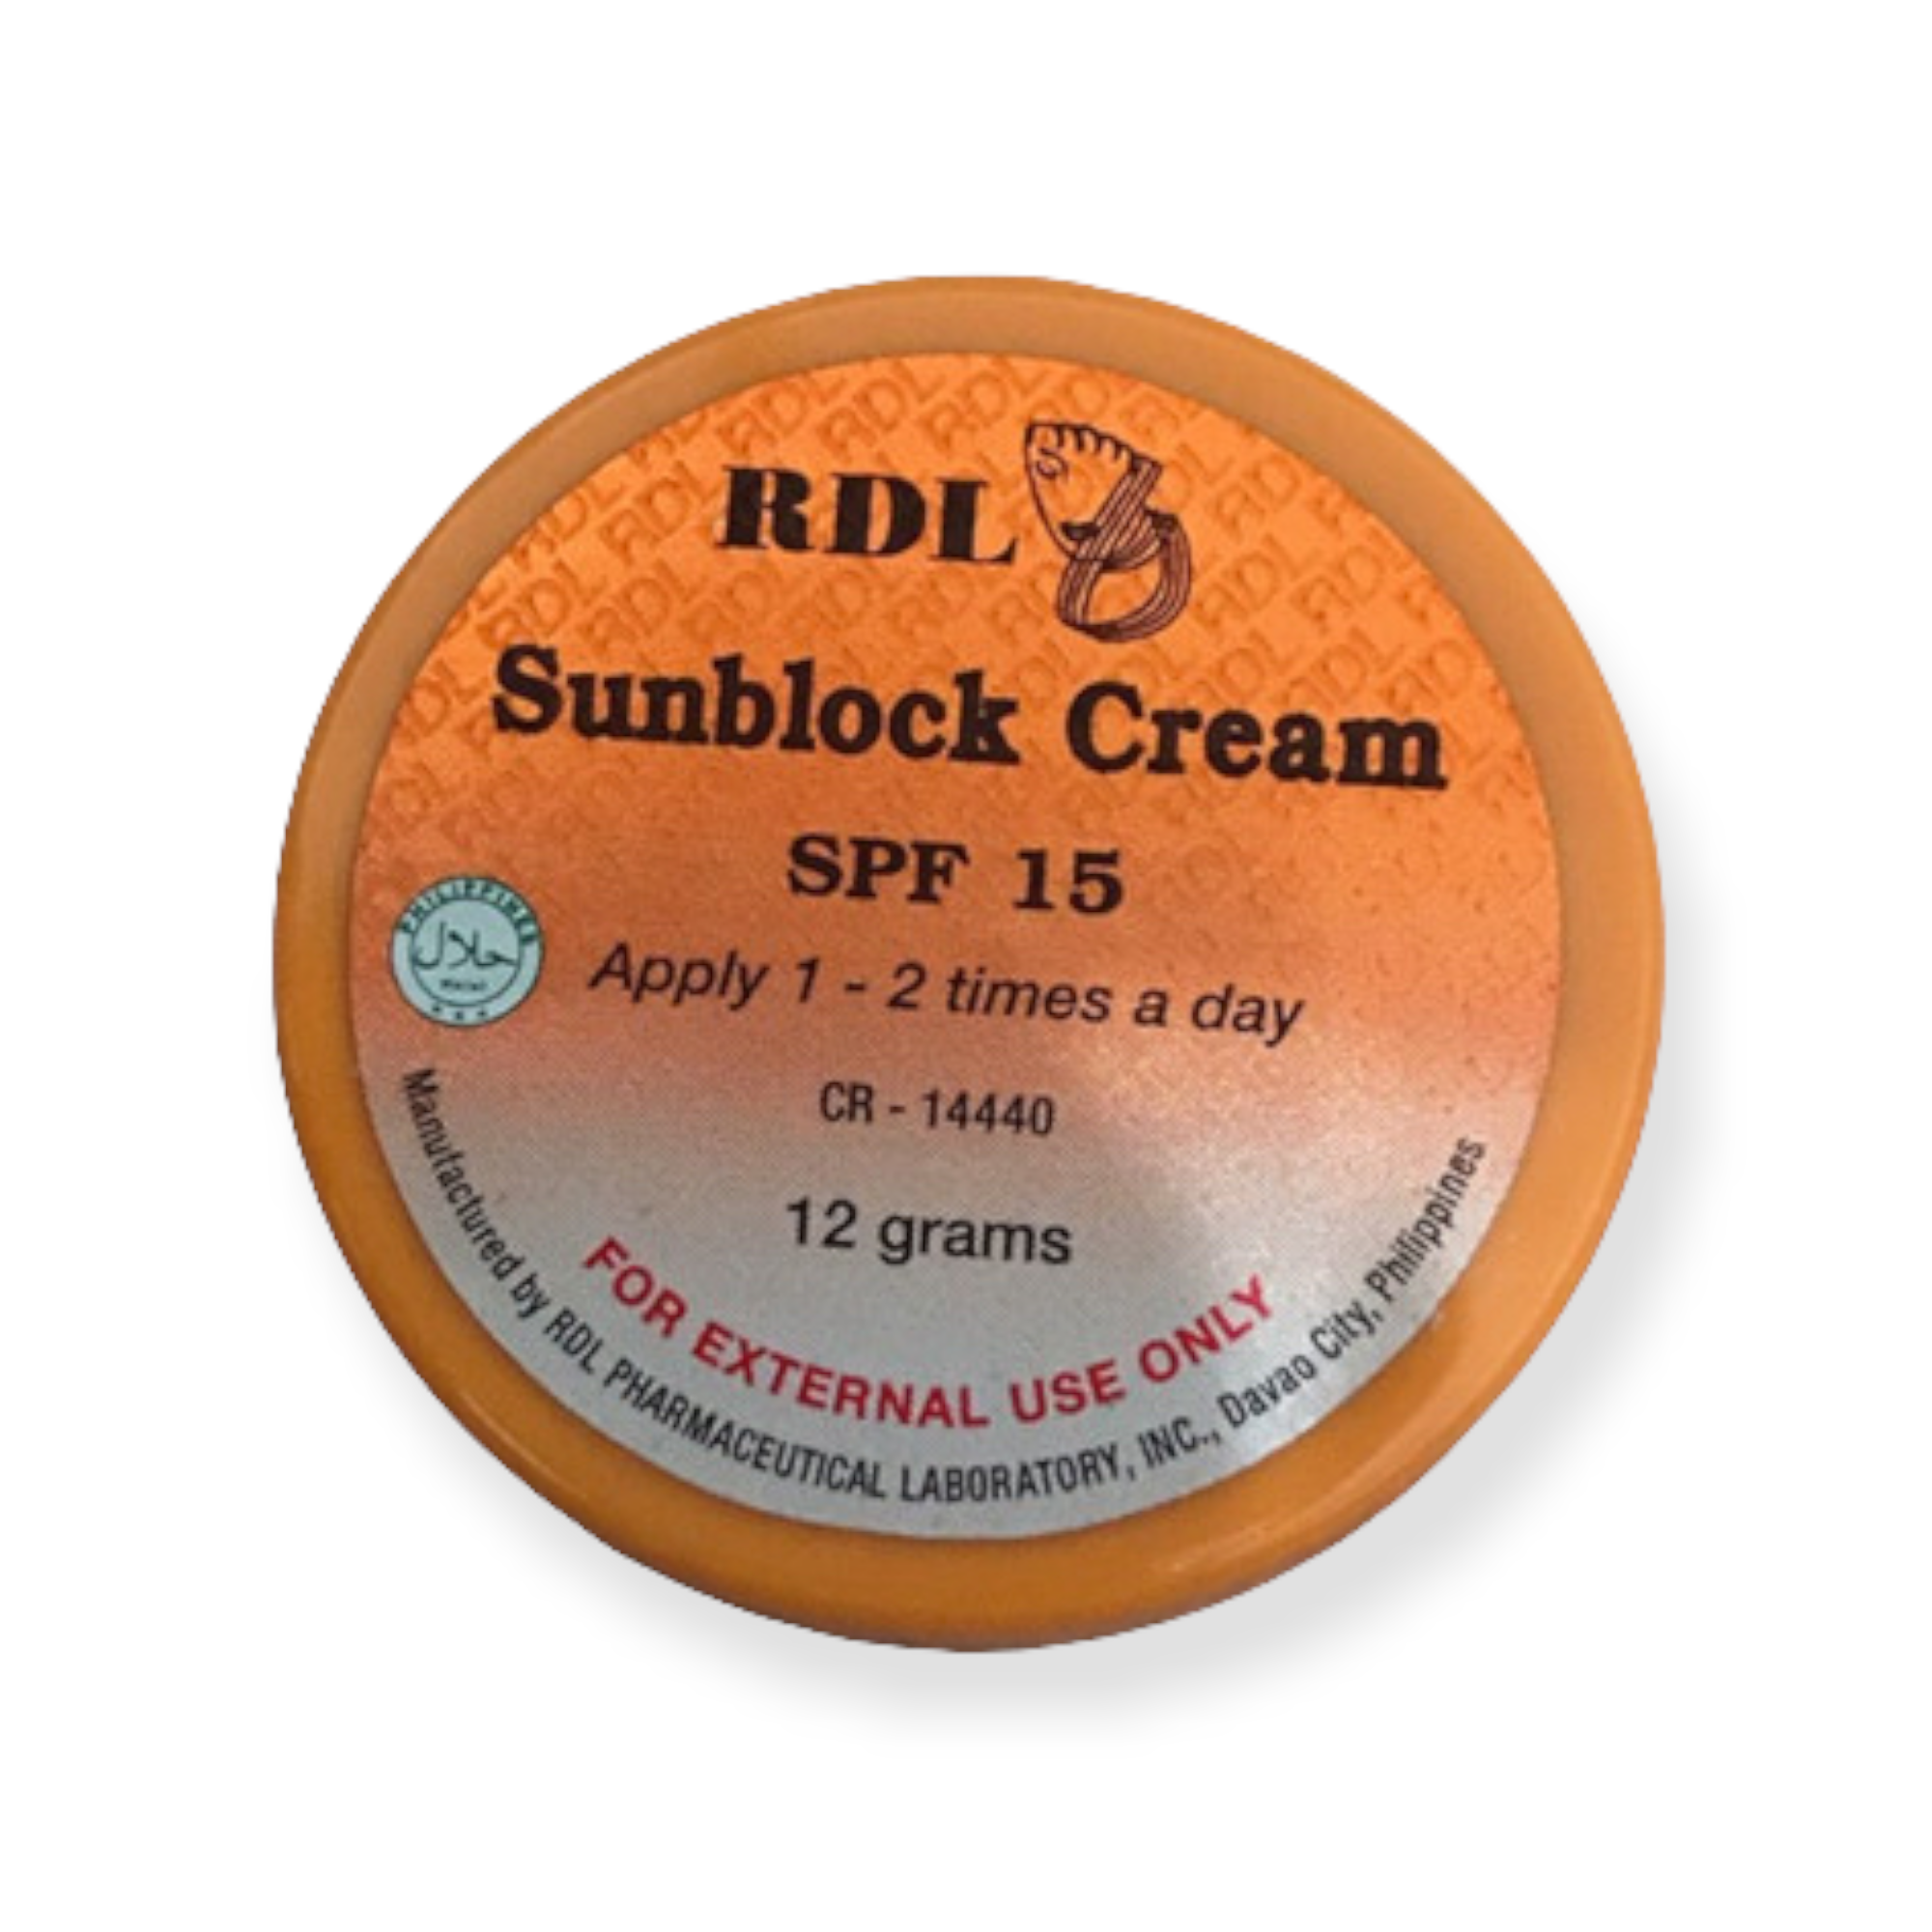 RDL Sunblock Cream SPF 15 - 12g